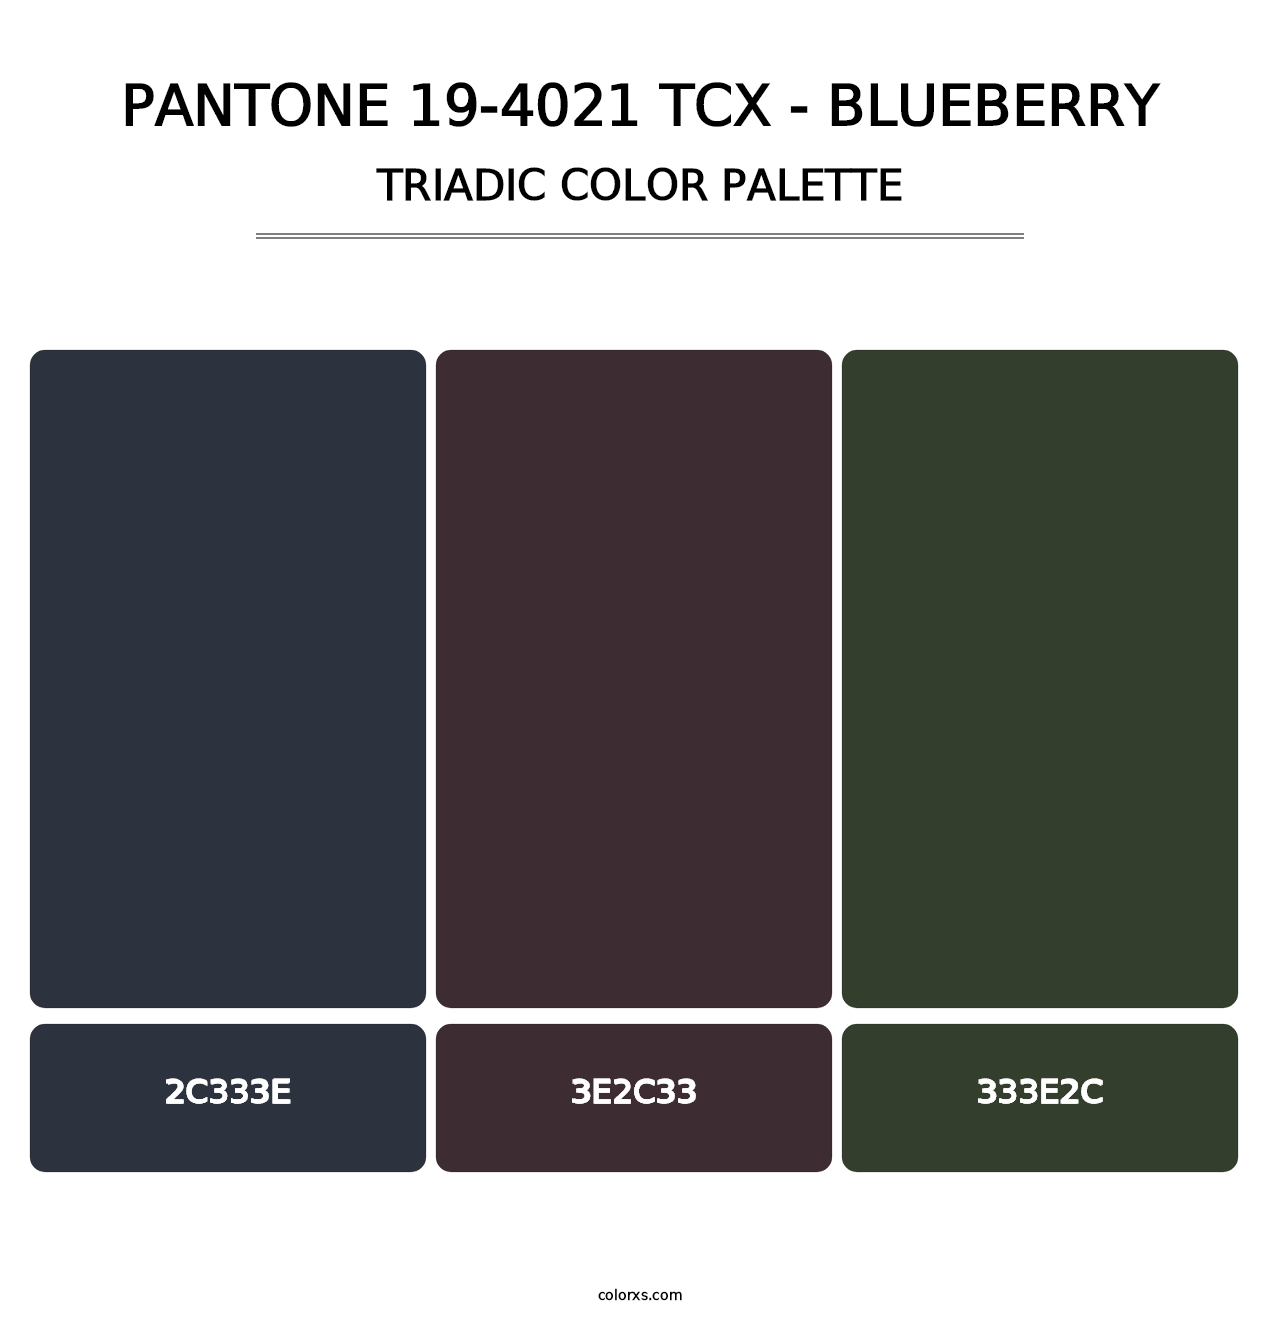 PANTONE 19-4021 TCX - Blueberry - Triadic Color Palette